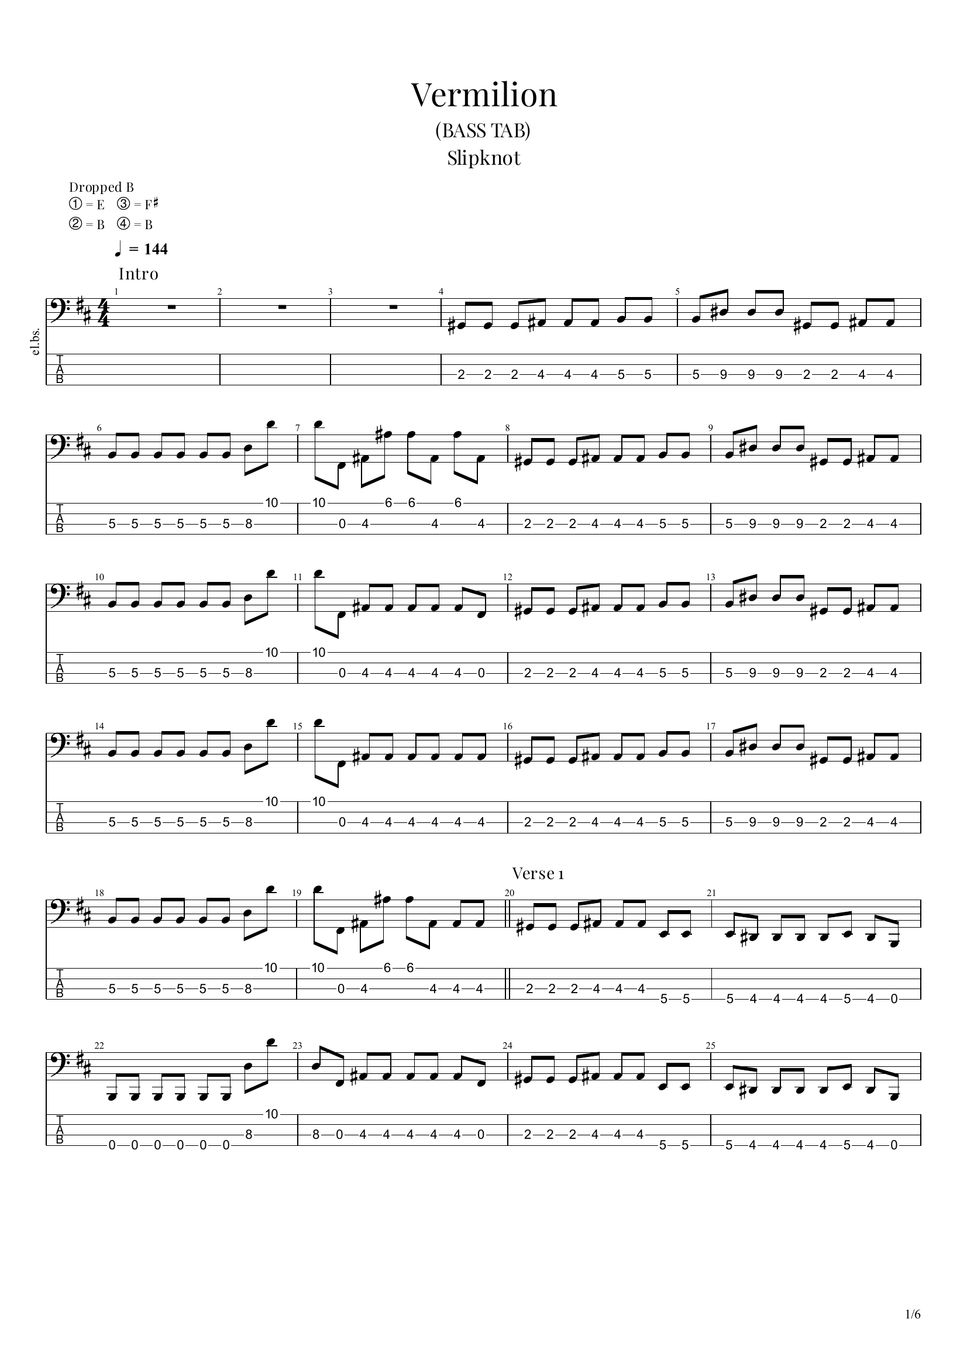 Slipknot - Vermilion (BASS TAB + Guitar Pro) by Um Hanwool